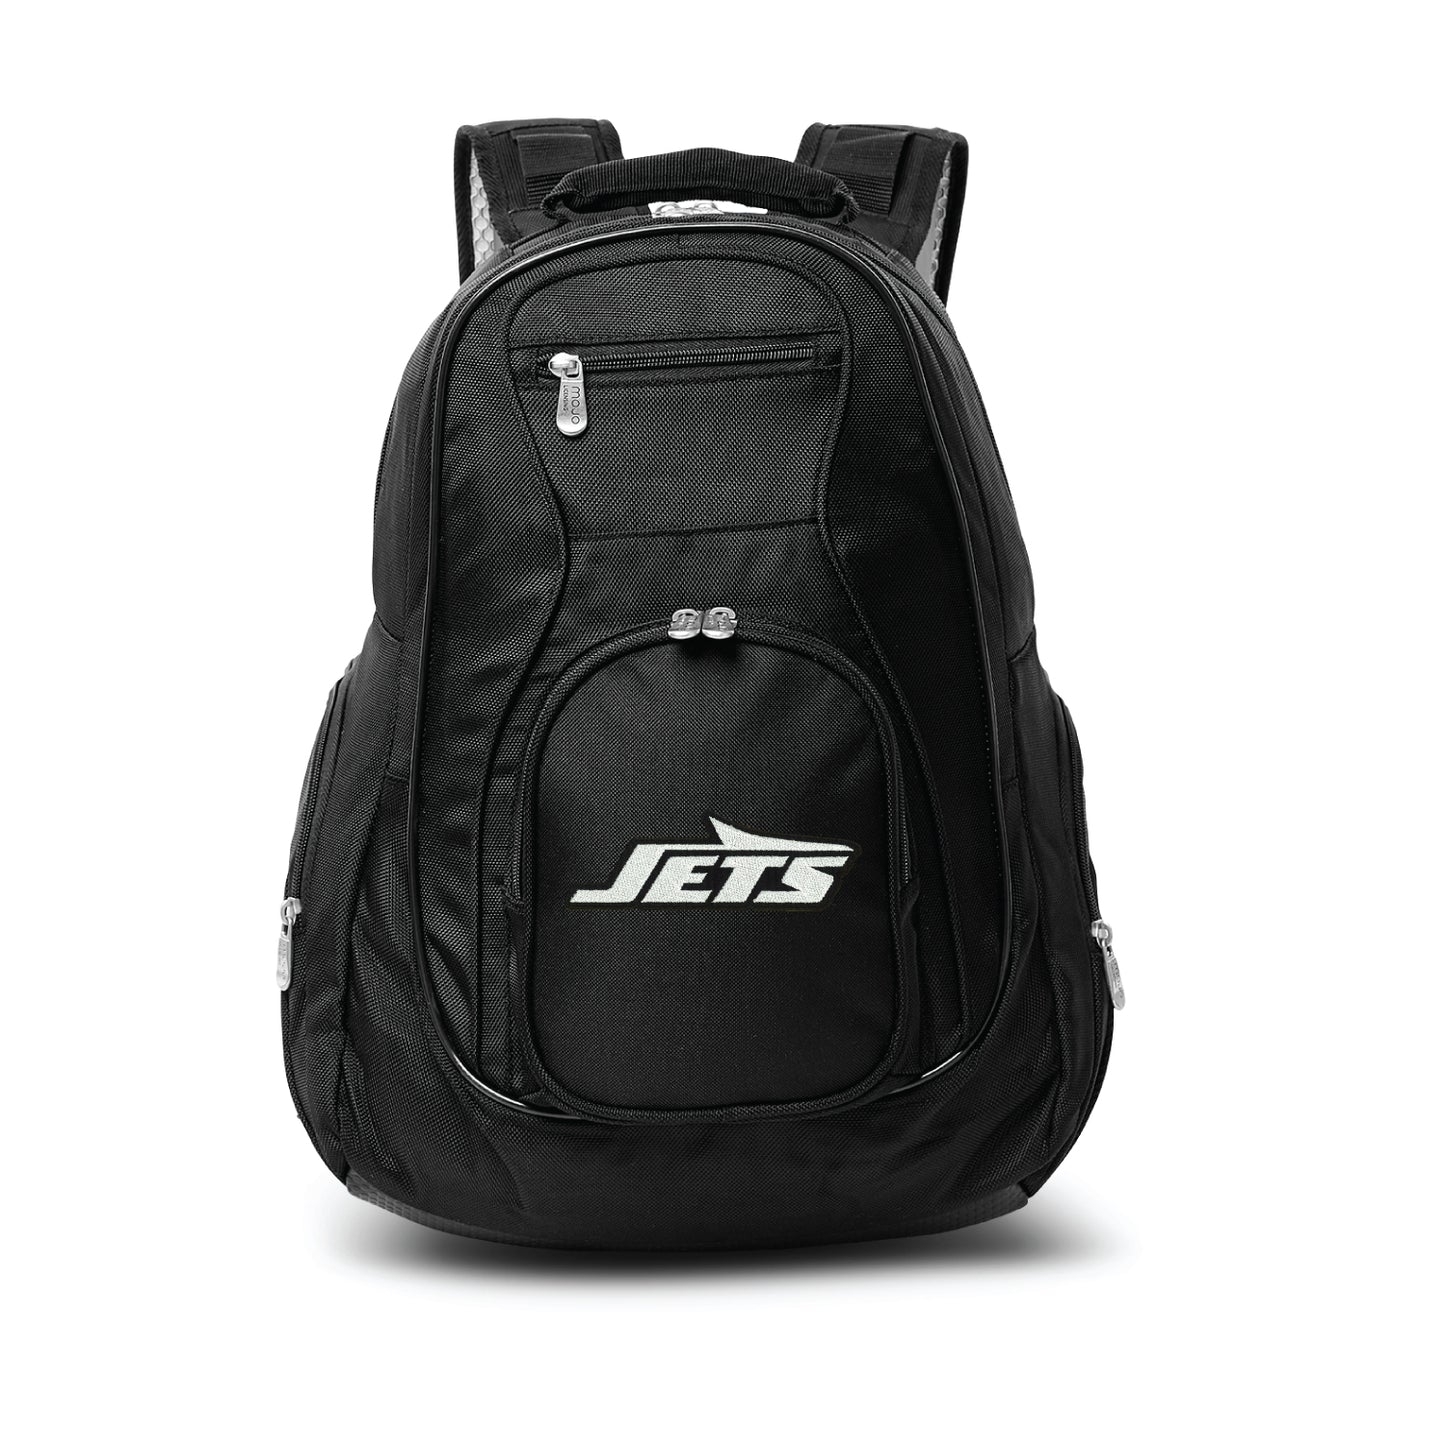 NY Jets Backpack | New York Jets Laptop Backpack- Black